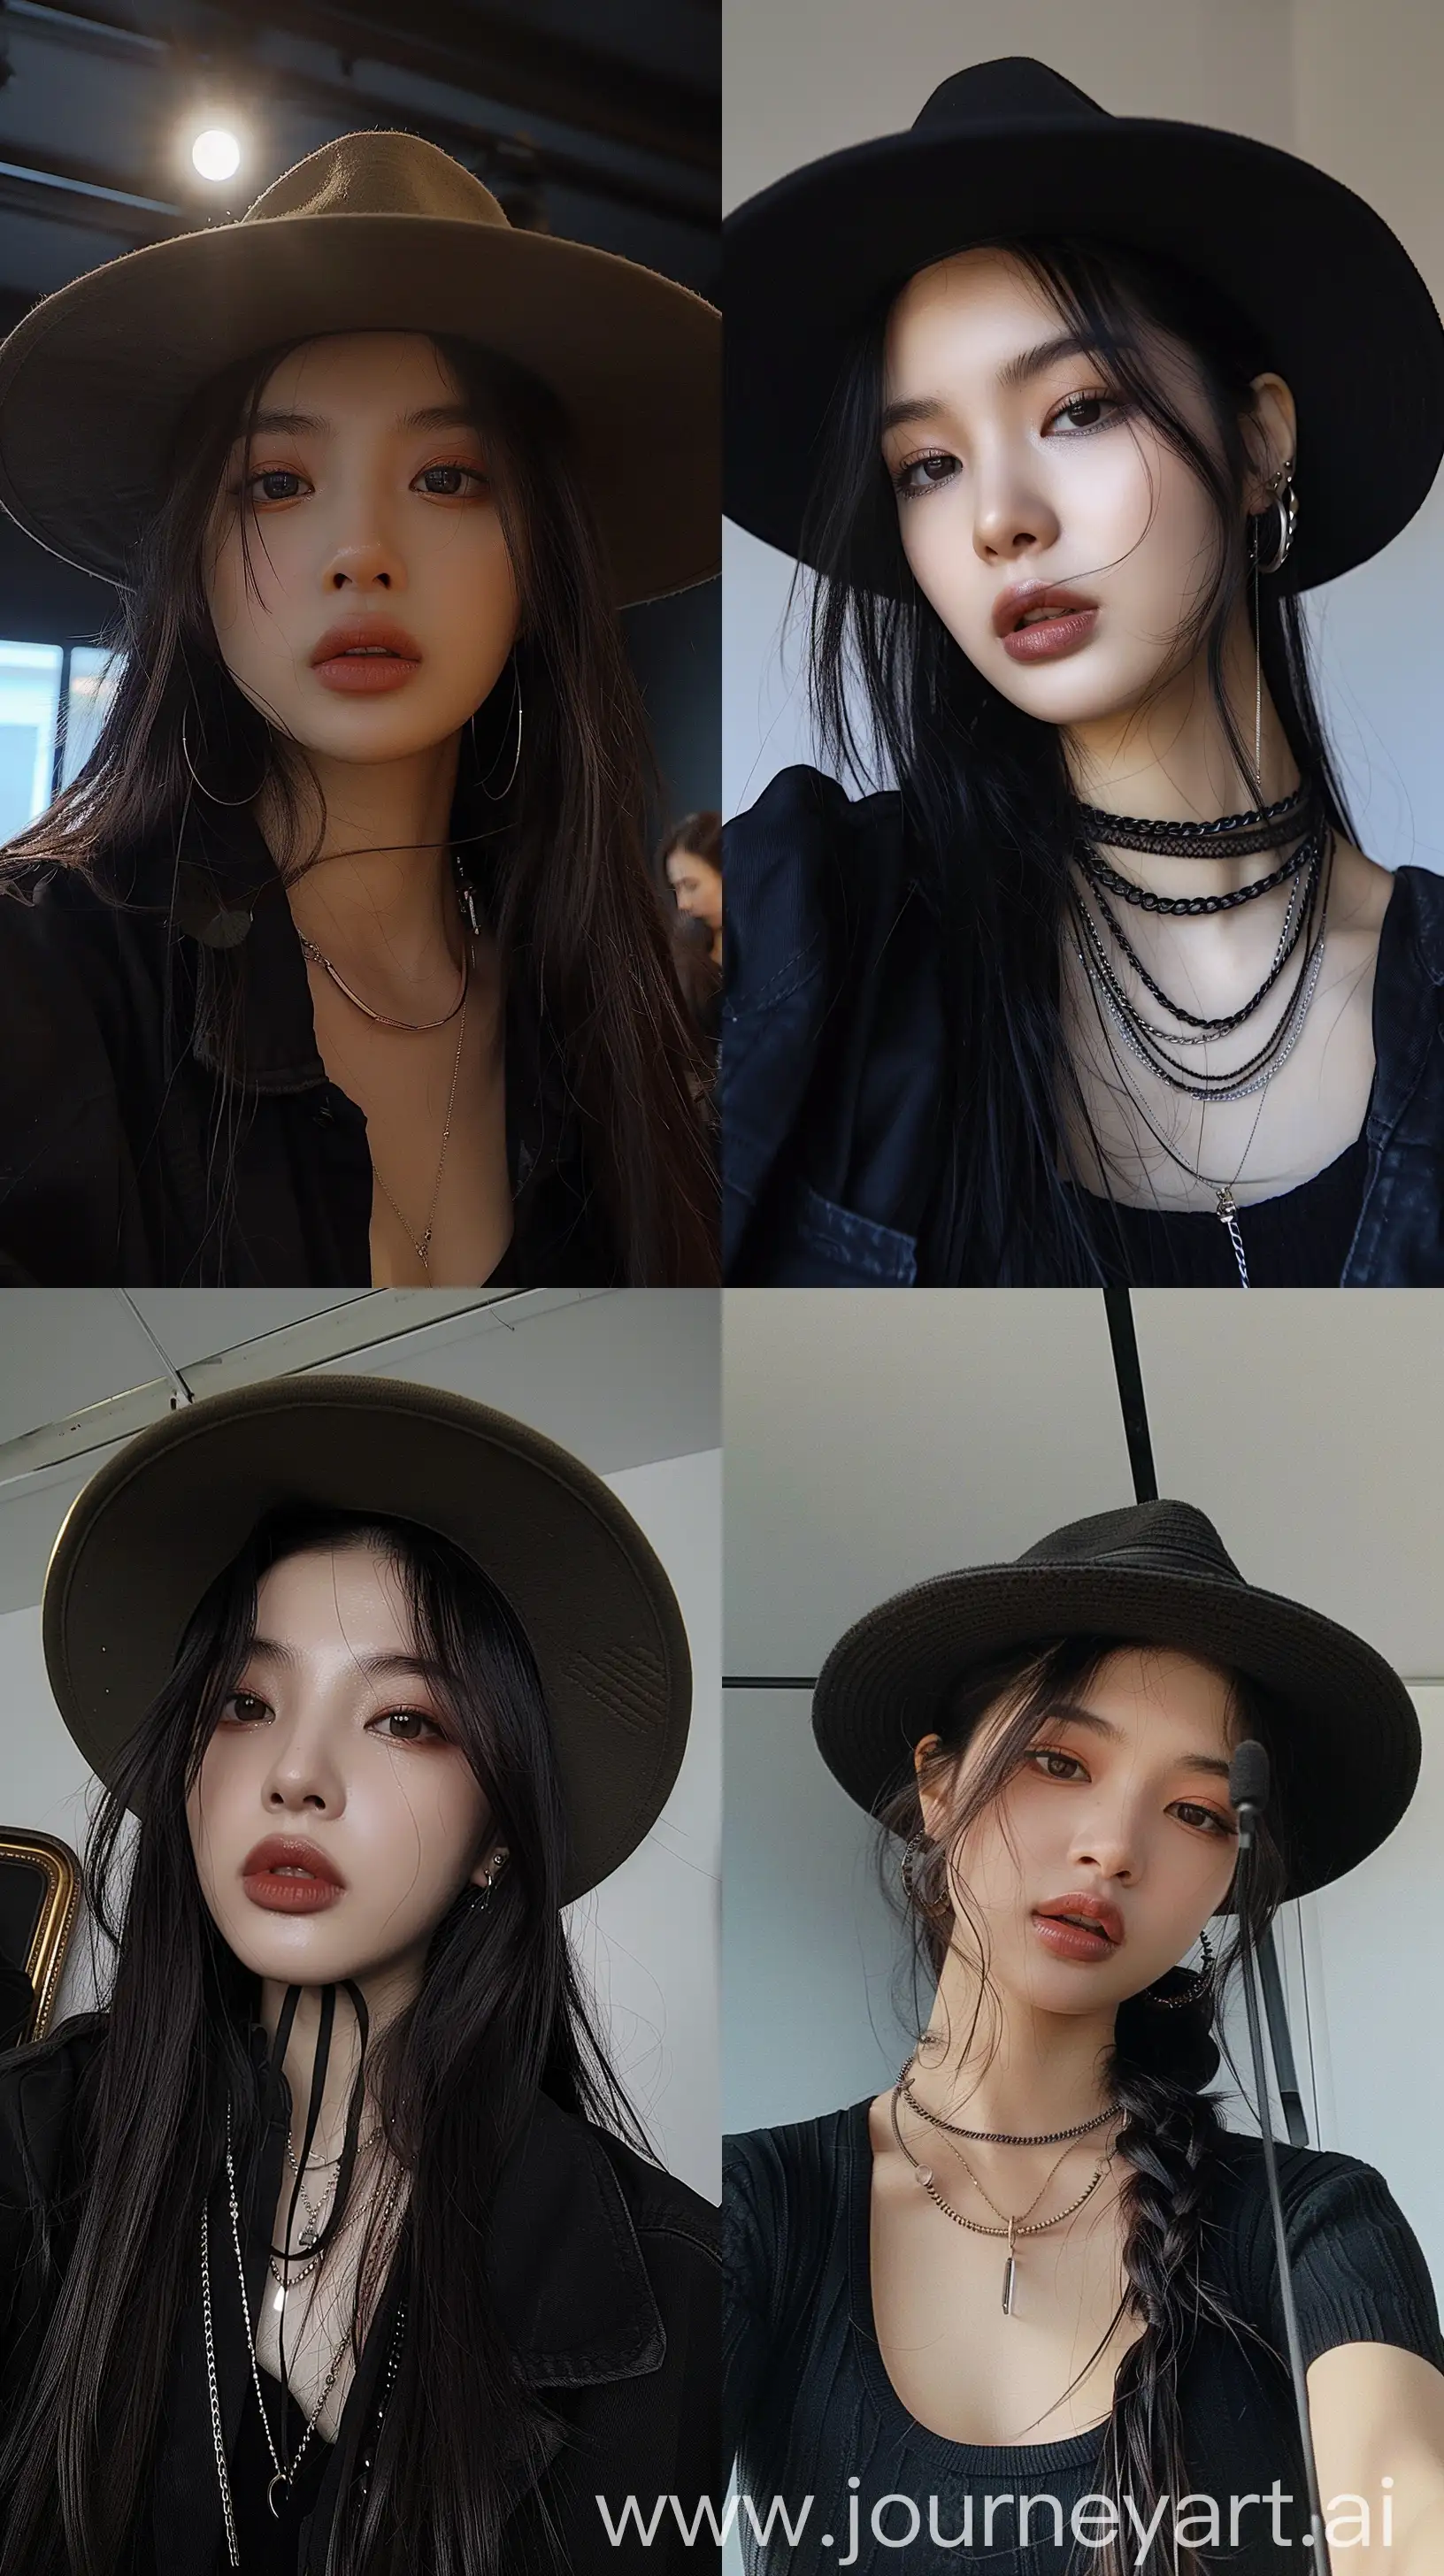 Blackpinks-Jennie-Selfie-Stylish-Black-Attire-and-Aesthetic-Makeup